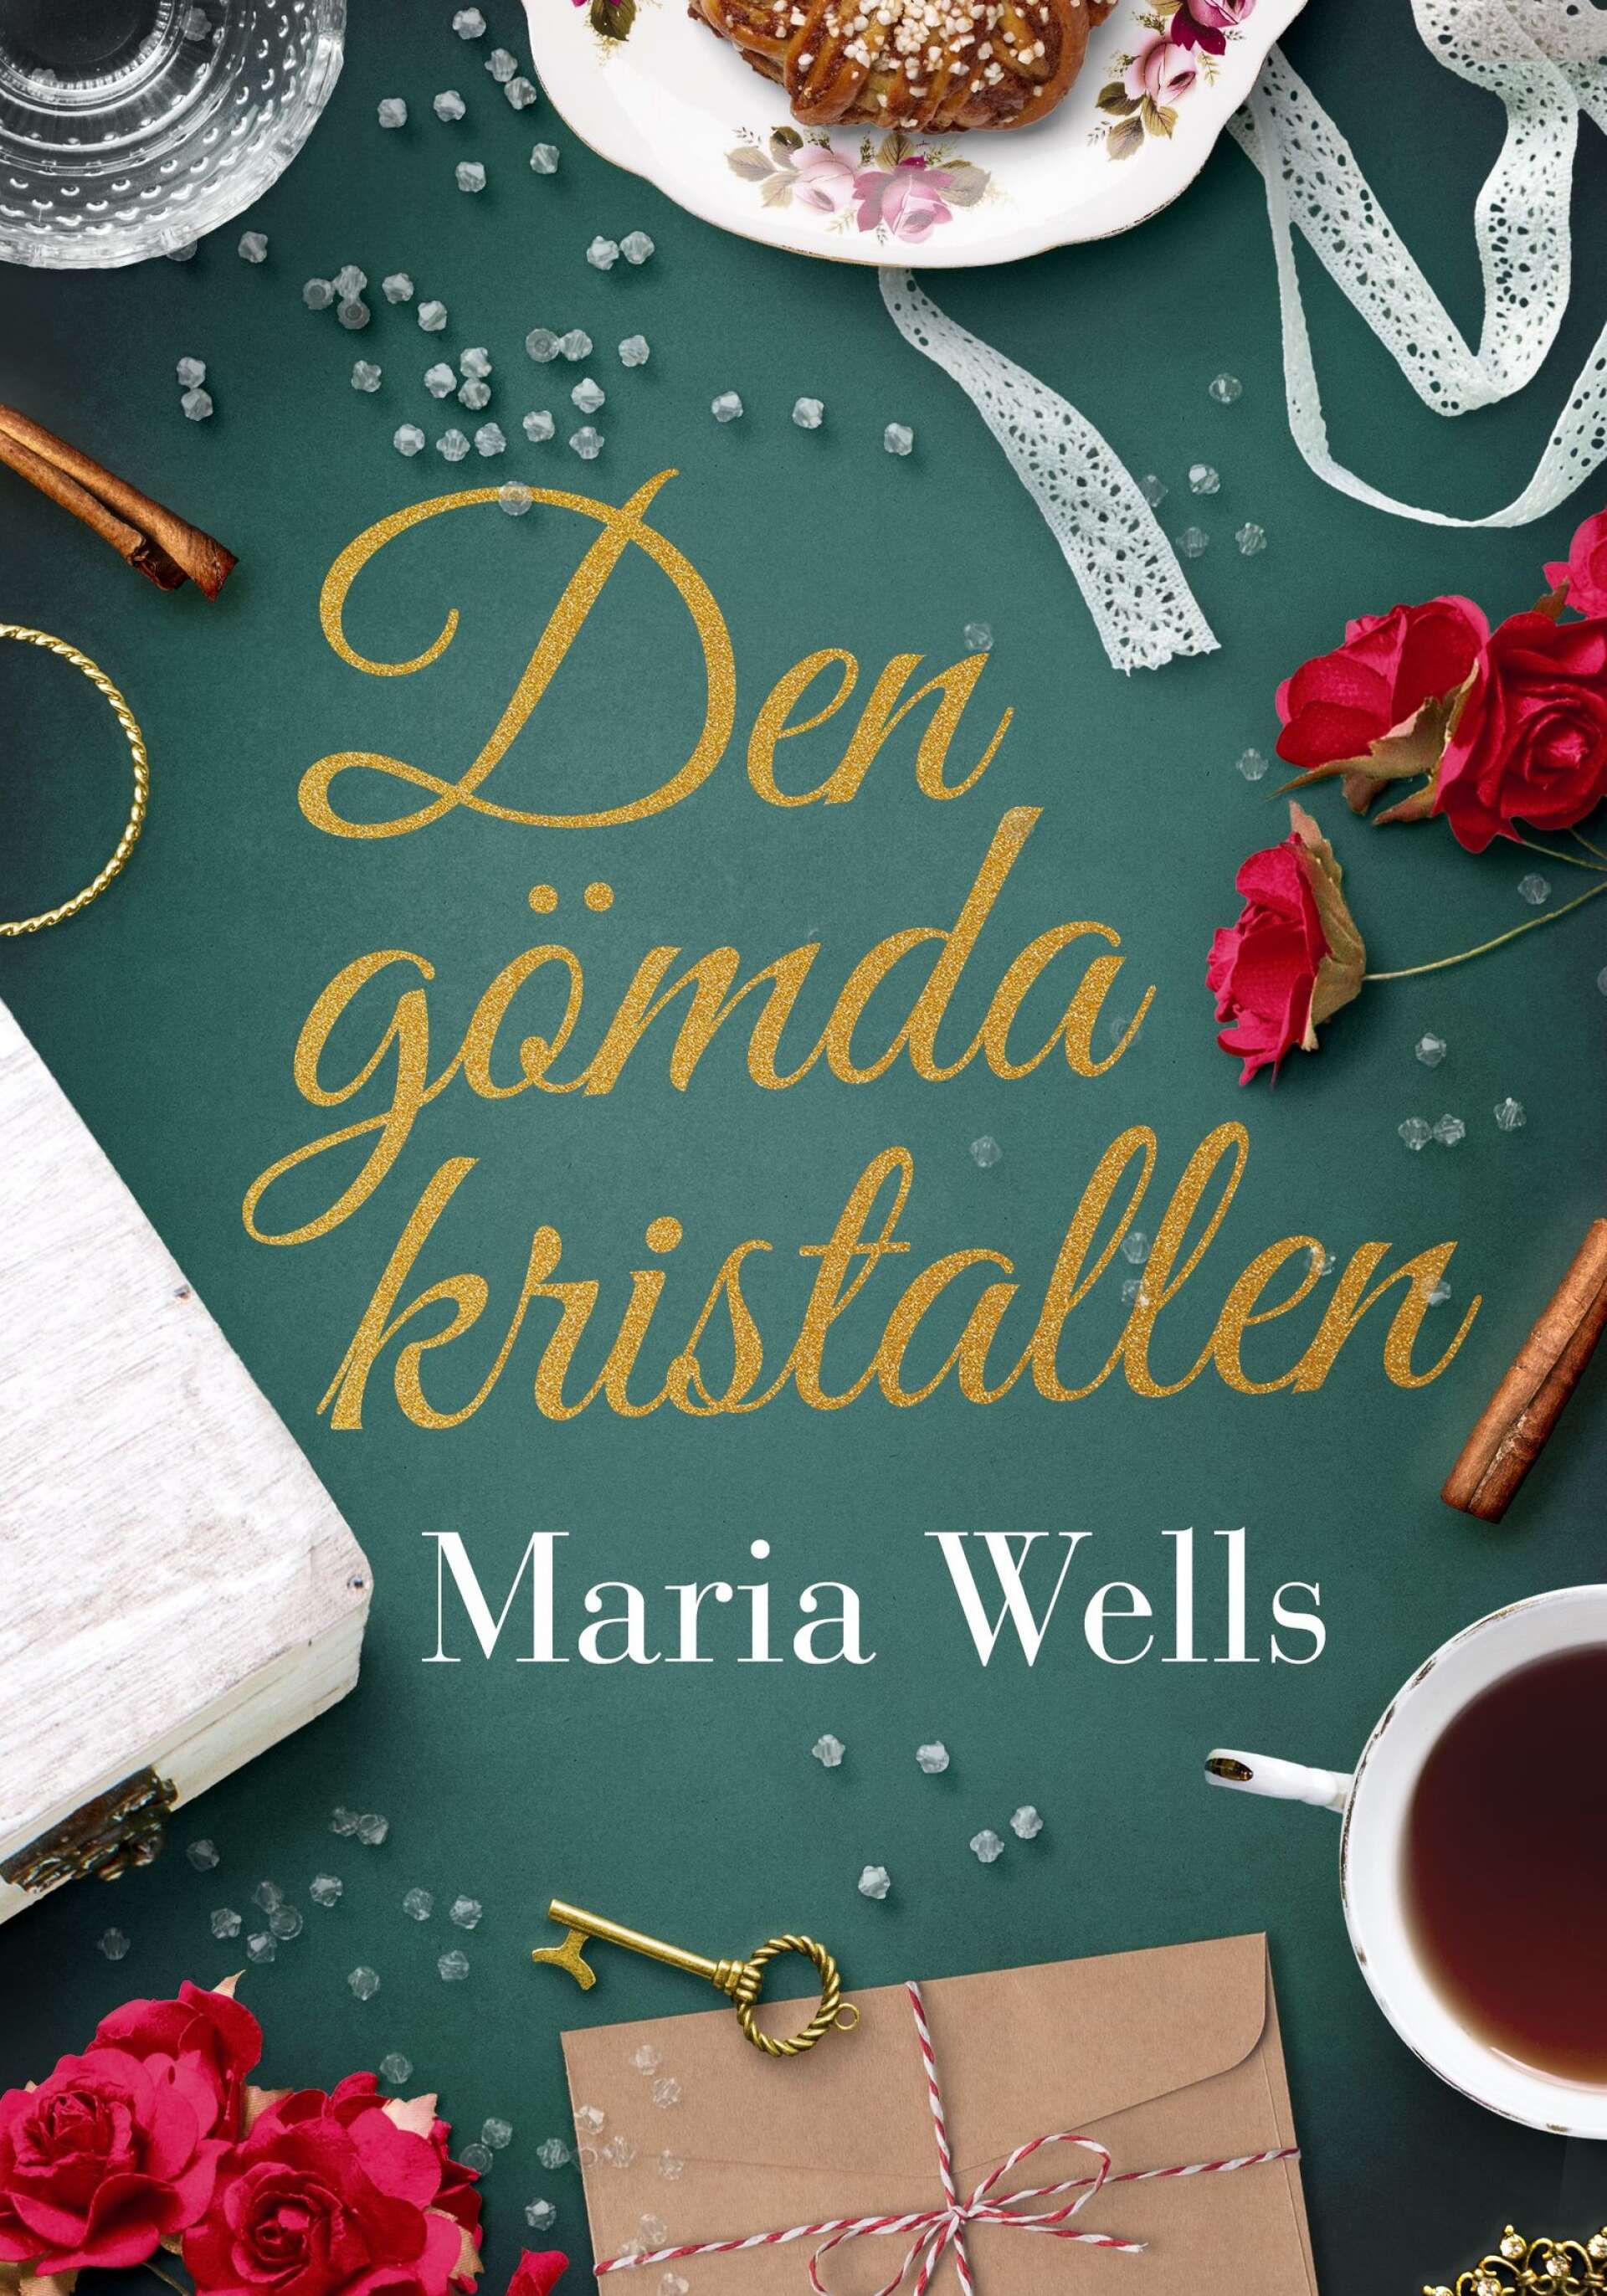 Maria Wells nya roman släpps den 10 oktober.